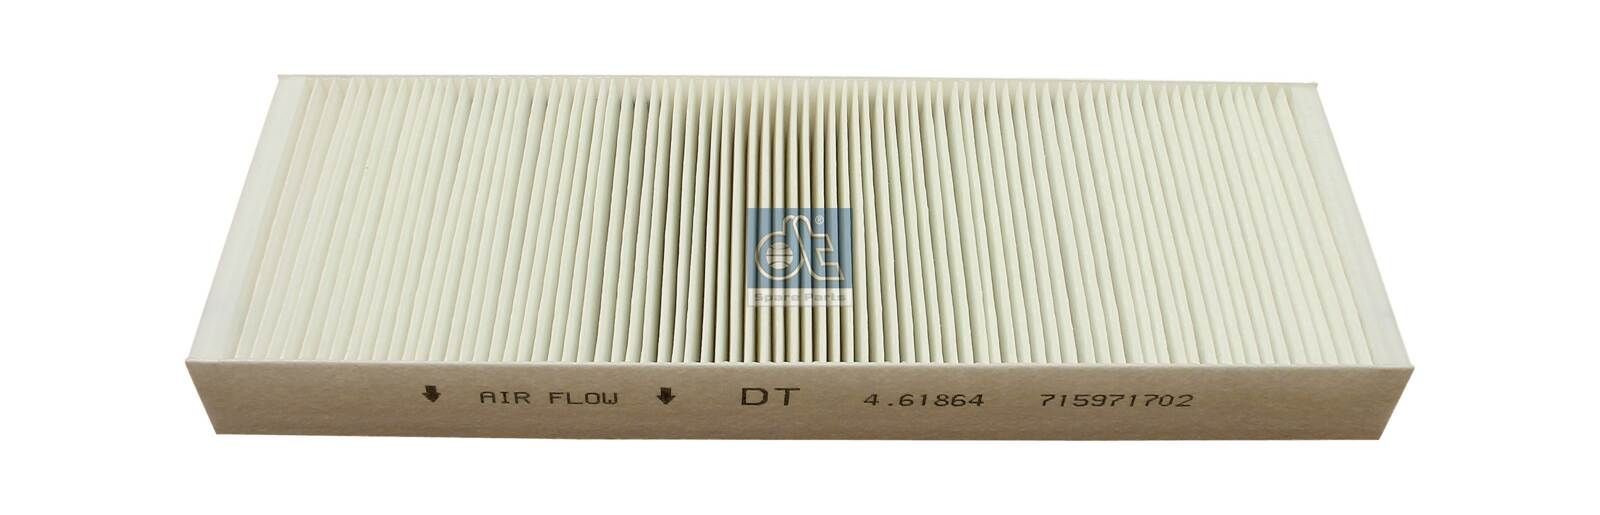 CU 3869 DT Spare Parts Pollen Filter, 375 mm x 135 mm x 35 mm Width: 135mm, Height: 35mm, Length: 375mm Cabin filter 4.61864 buy